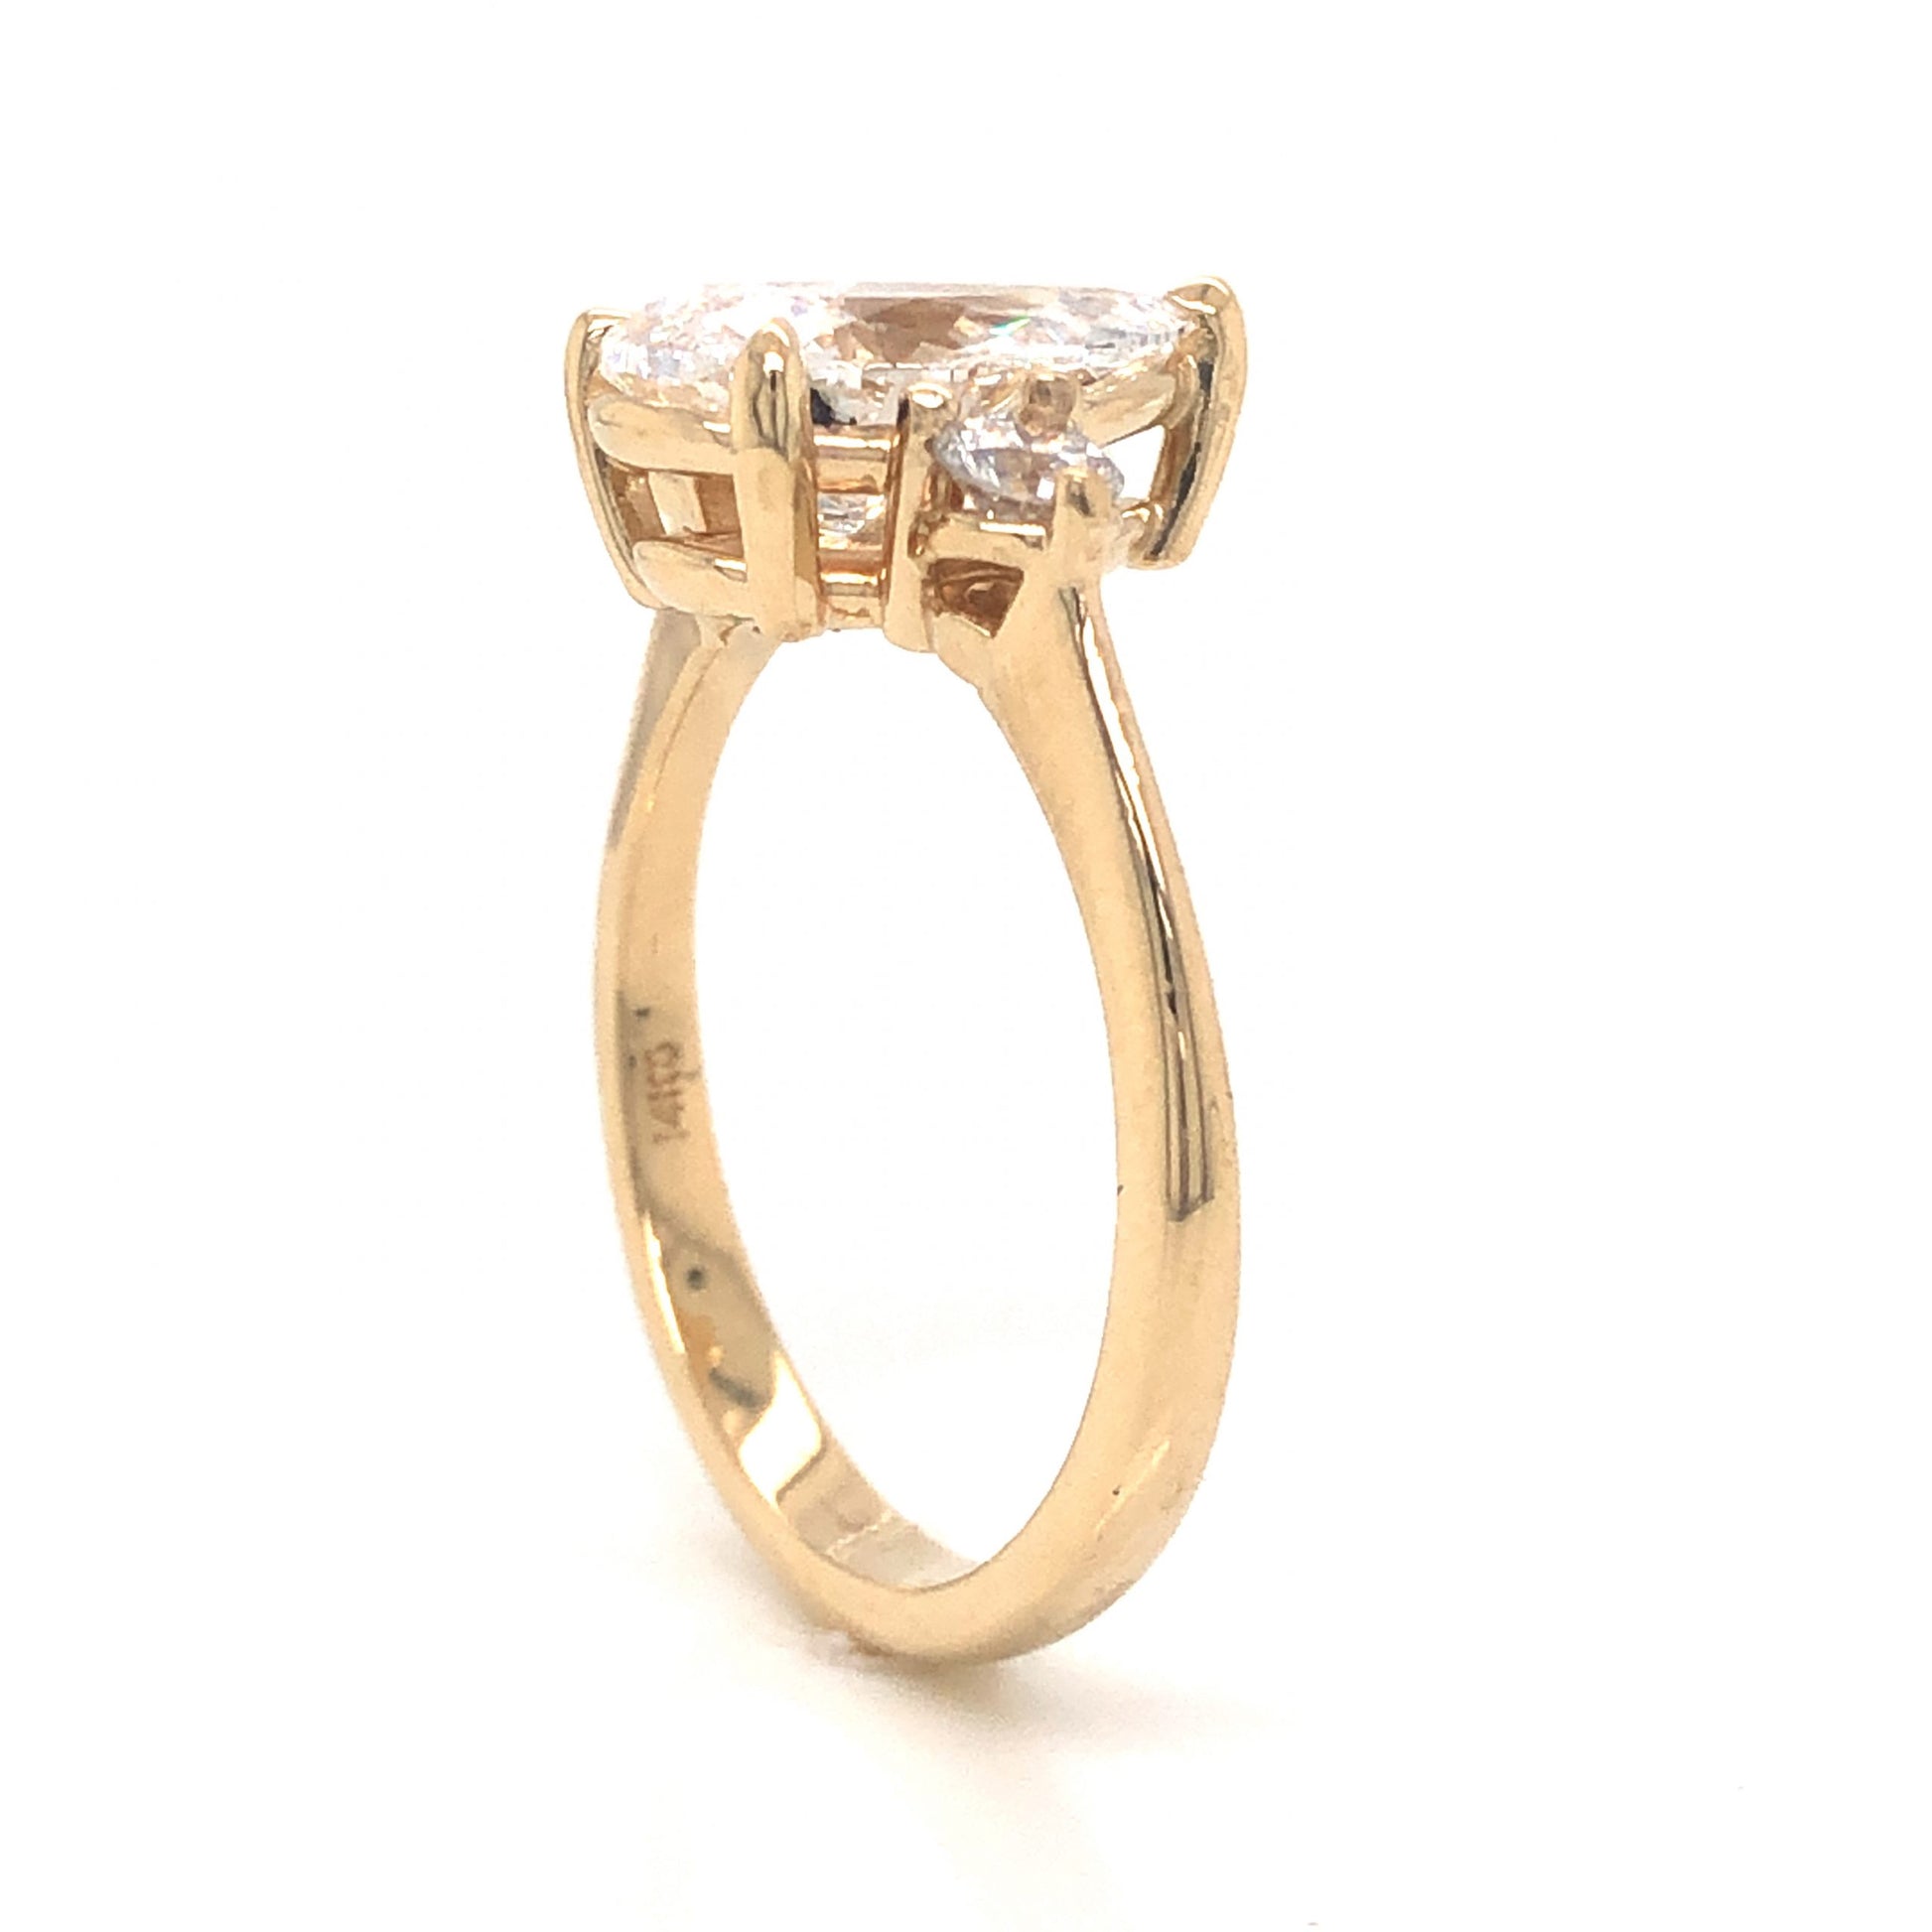 2 Carat Pear Cut Diamond Engagement Ring in 14k Yellow Gold